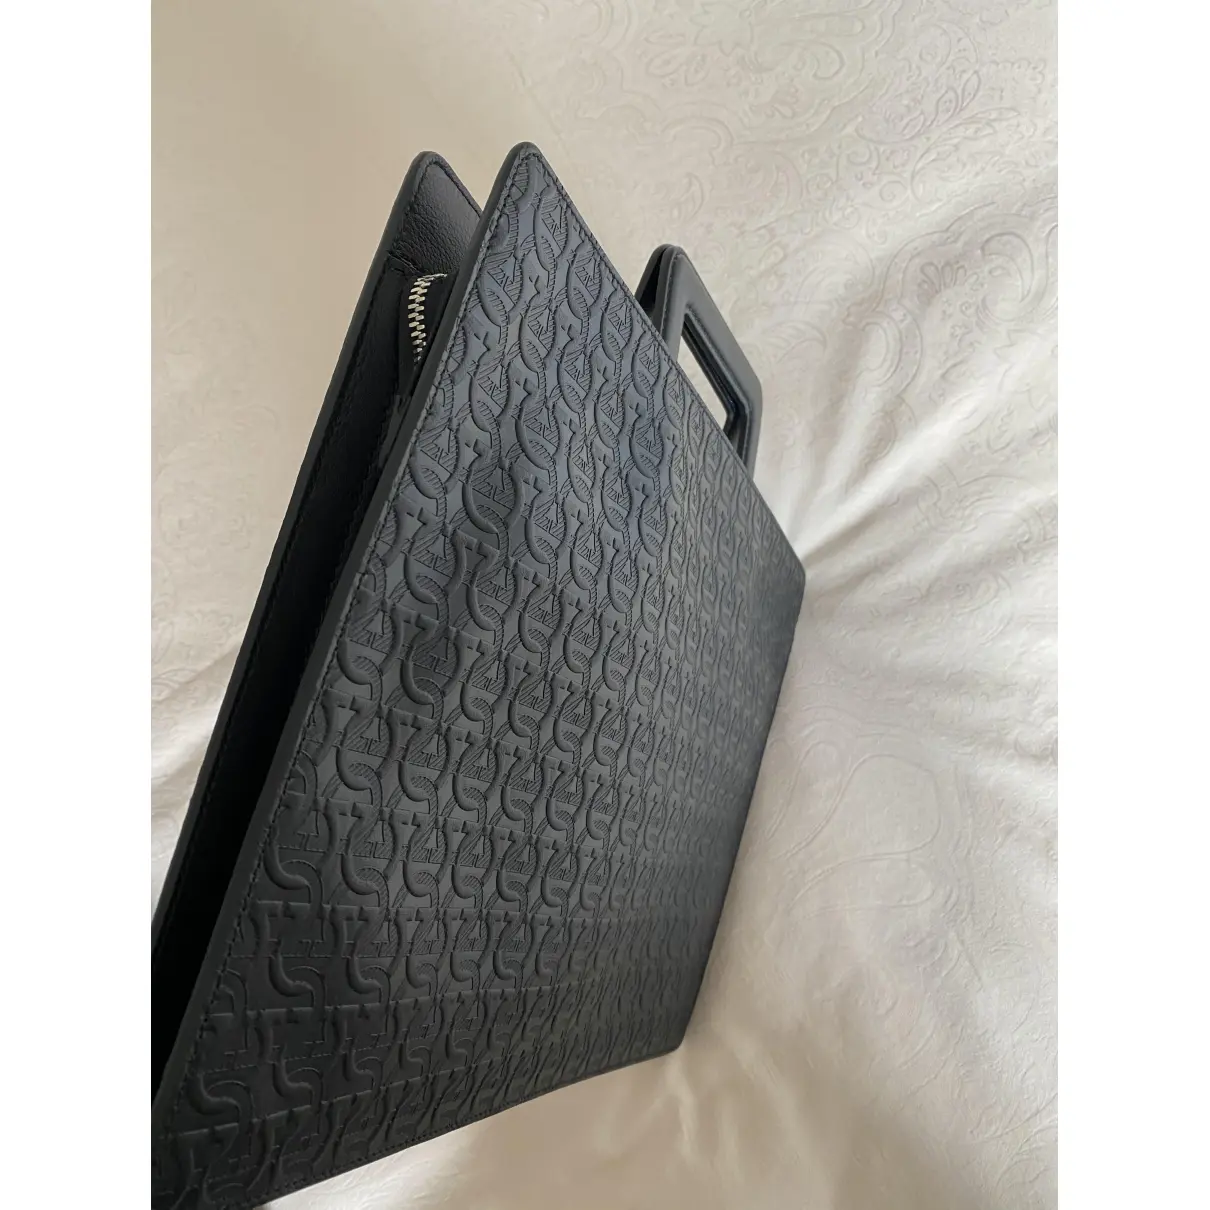 Buy Salvatore Ferragamo Leather bag online